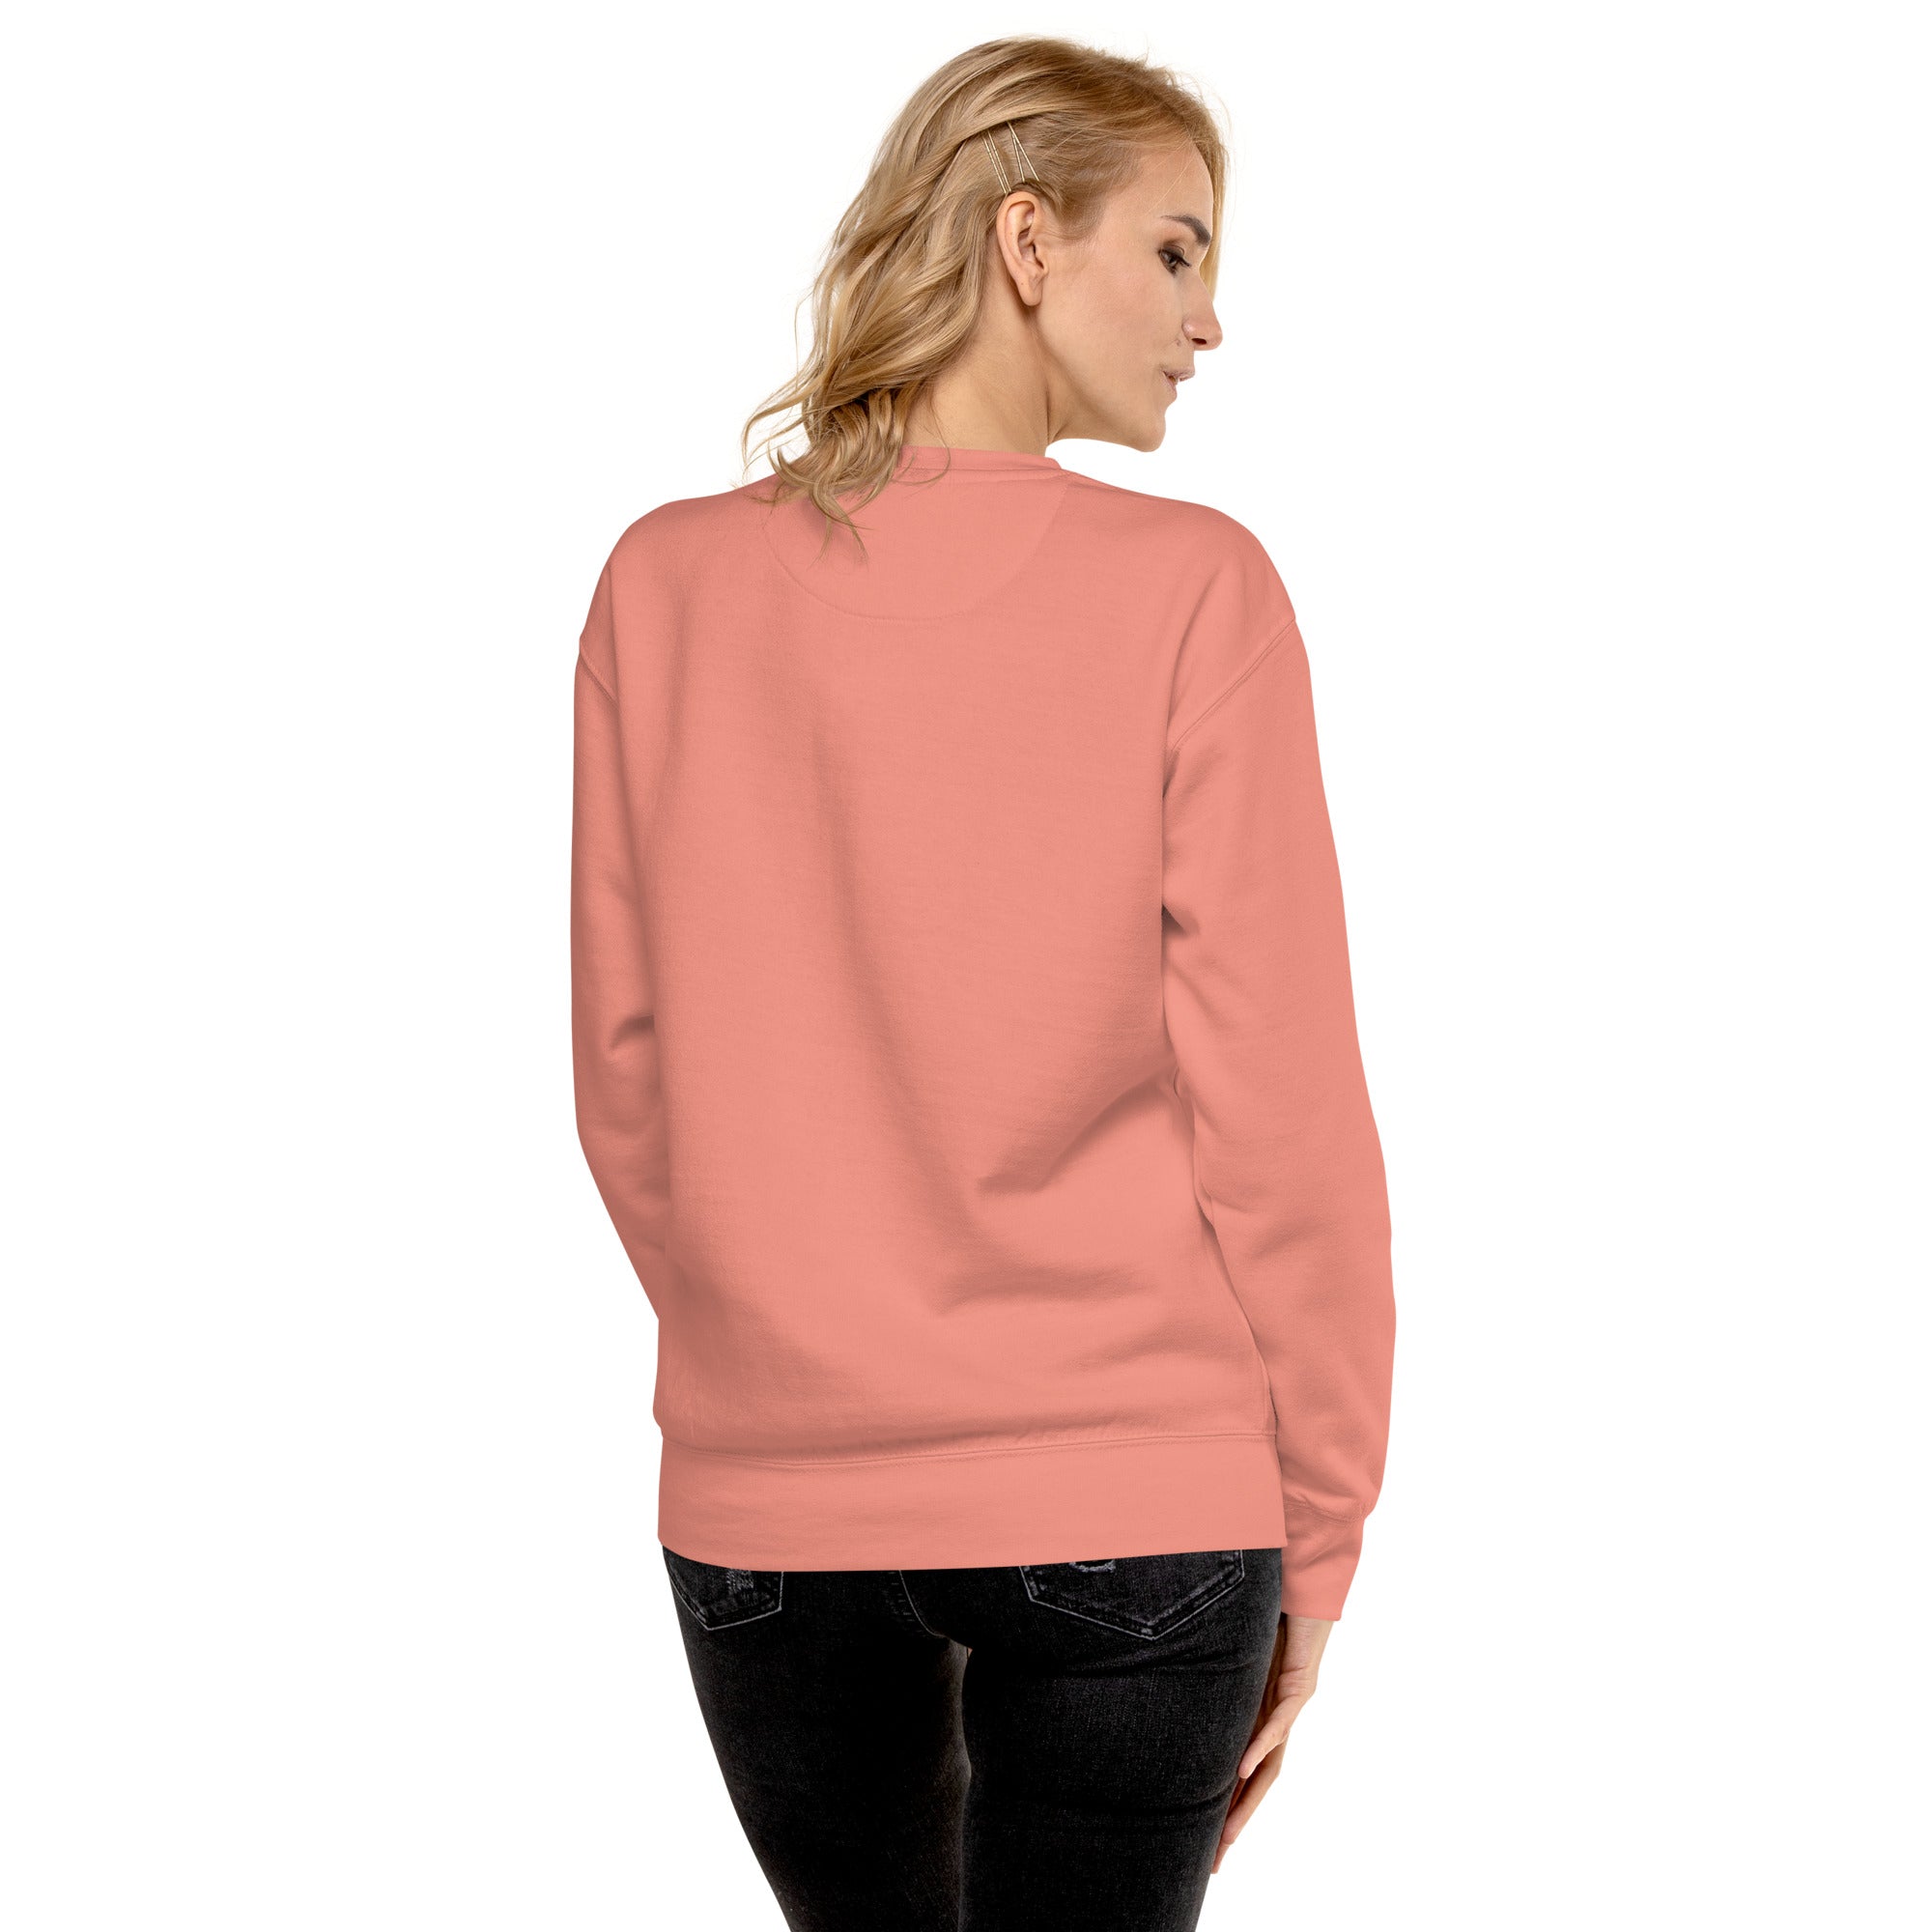 Unisex Premium Sweatshirt, Back to School, Everyday Sweatshirt, Streetwear, gift